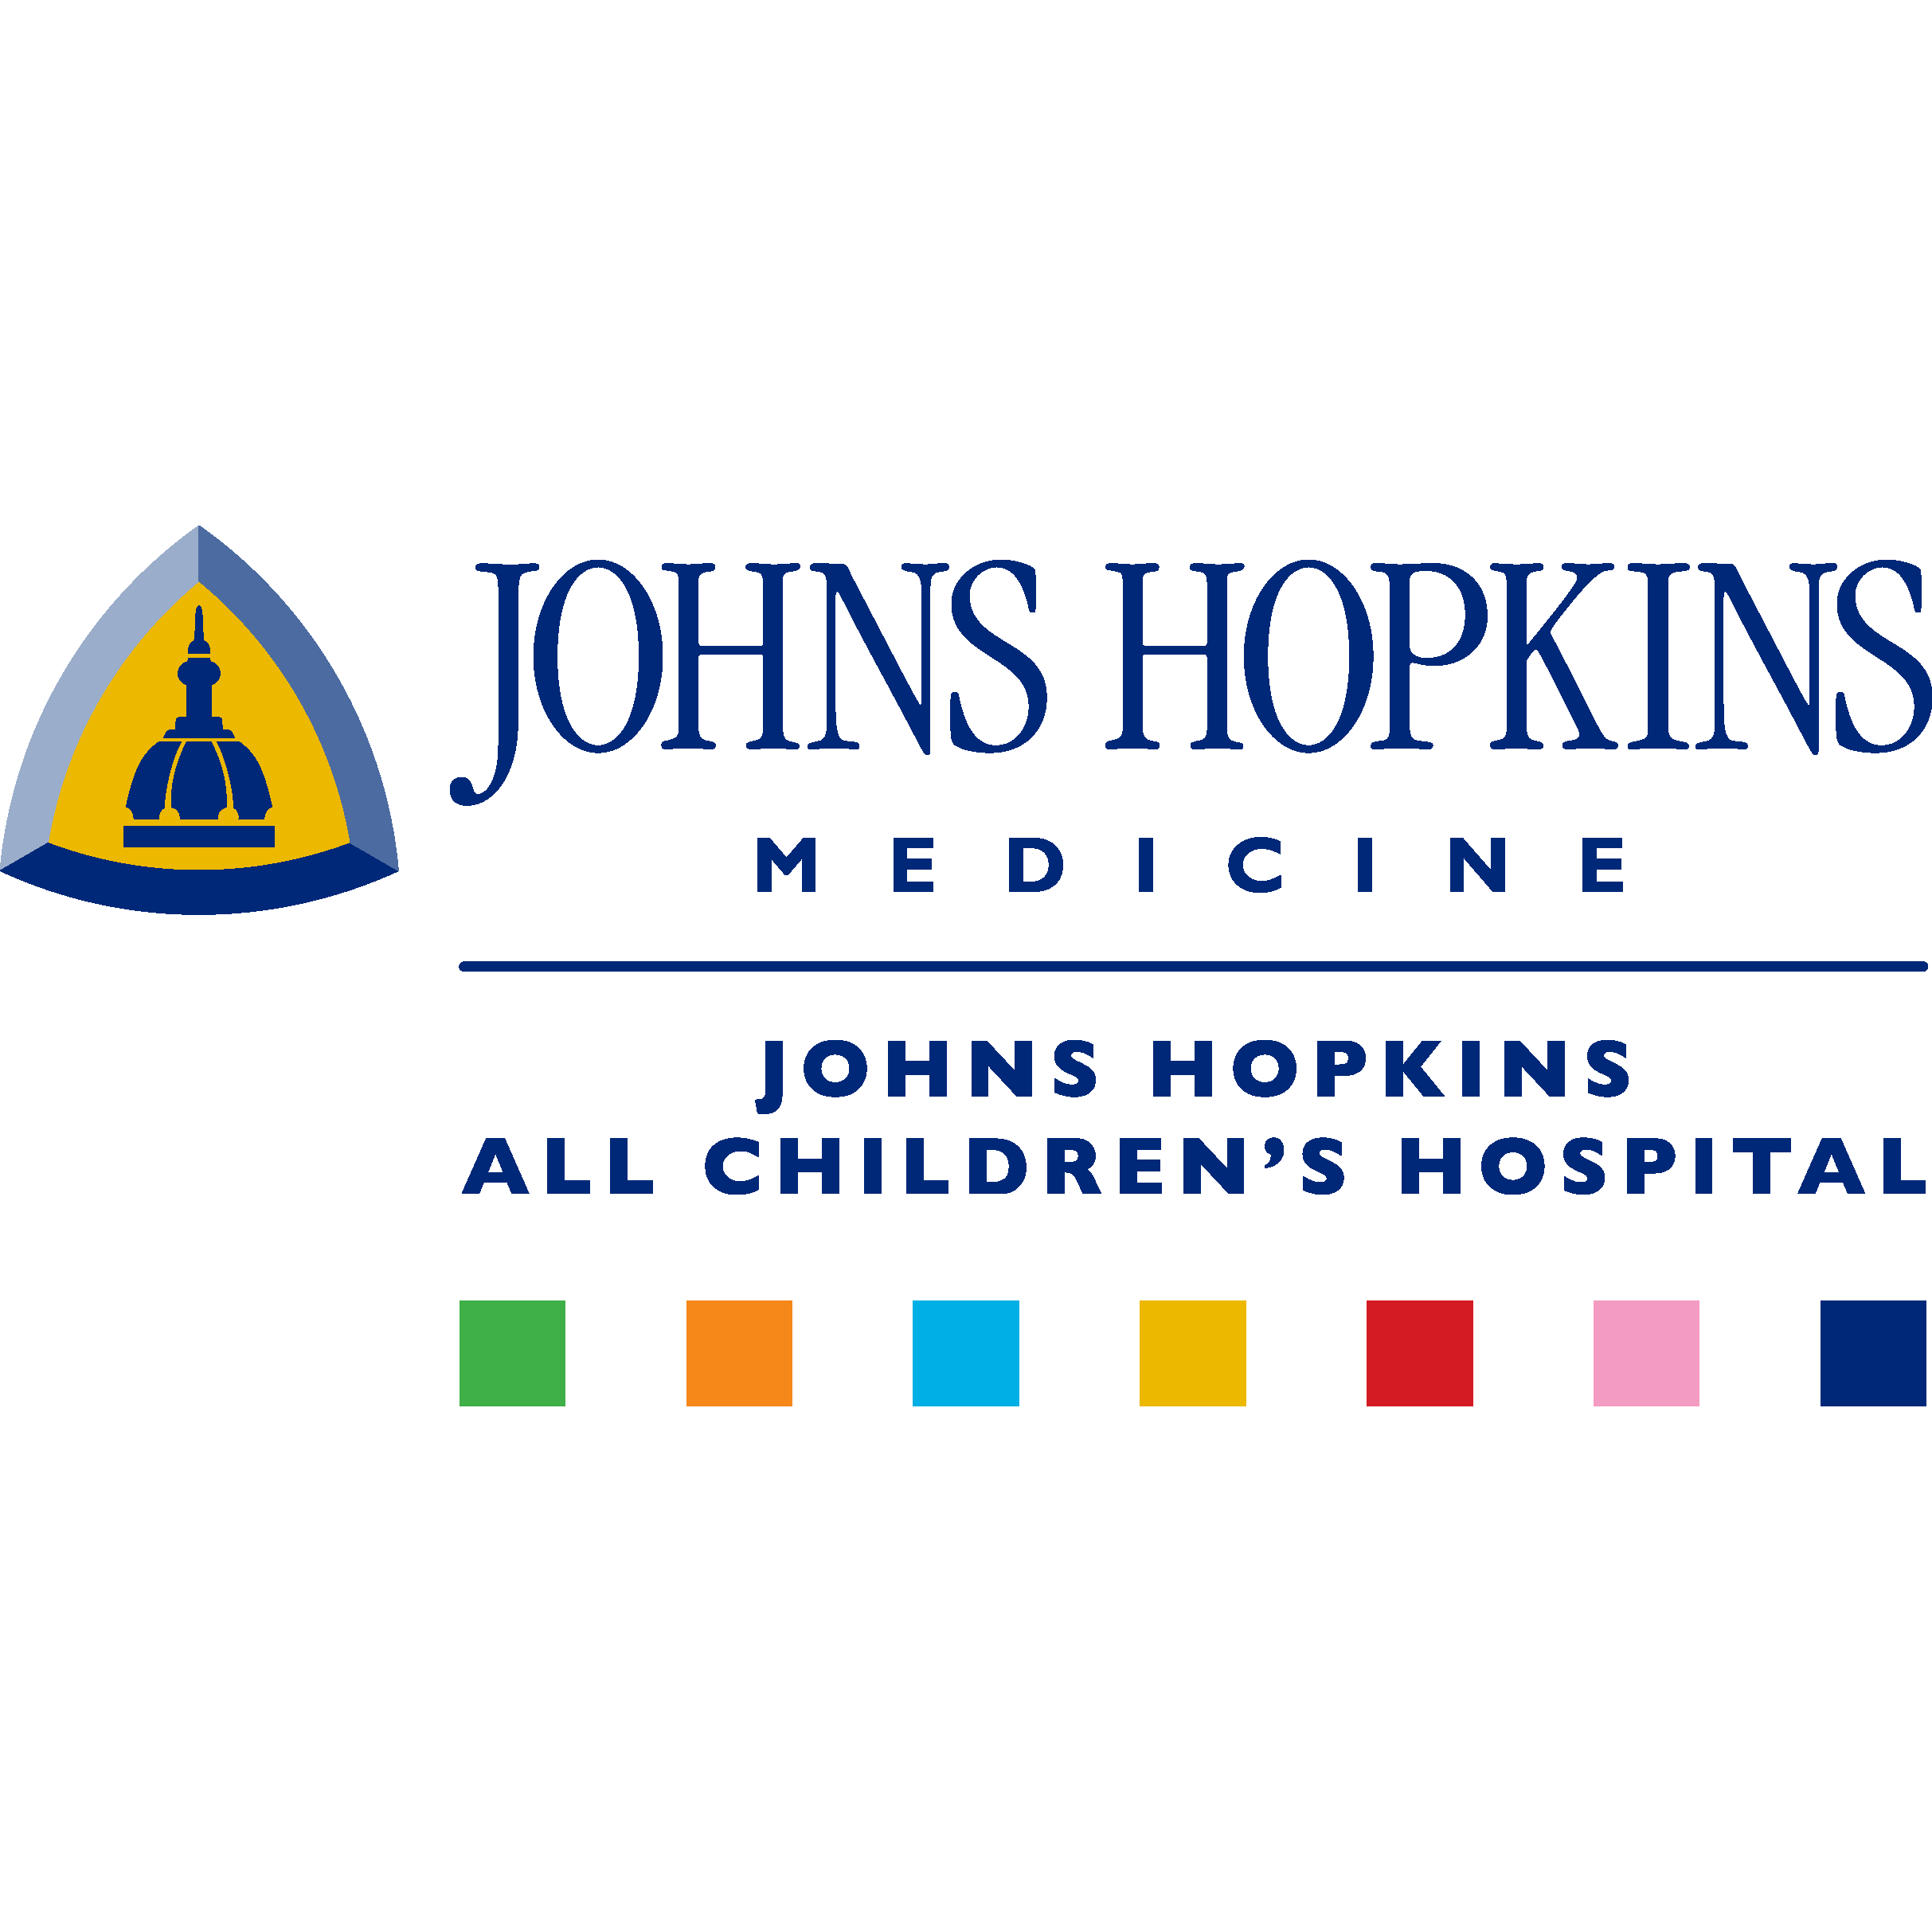 Johns Hopkins All Children's Outpatient Care, Lakewood Ranch - Bradenton, FL 34202 - (941)309-6550 | ShowMeLocal.com